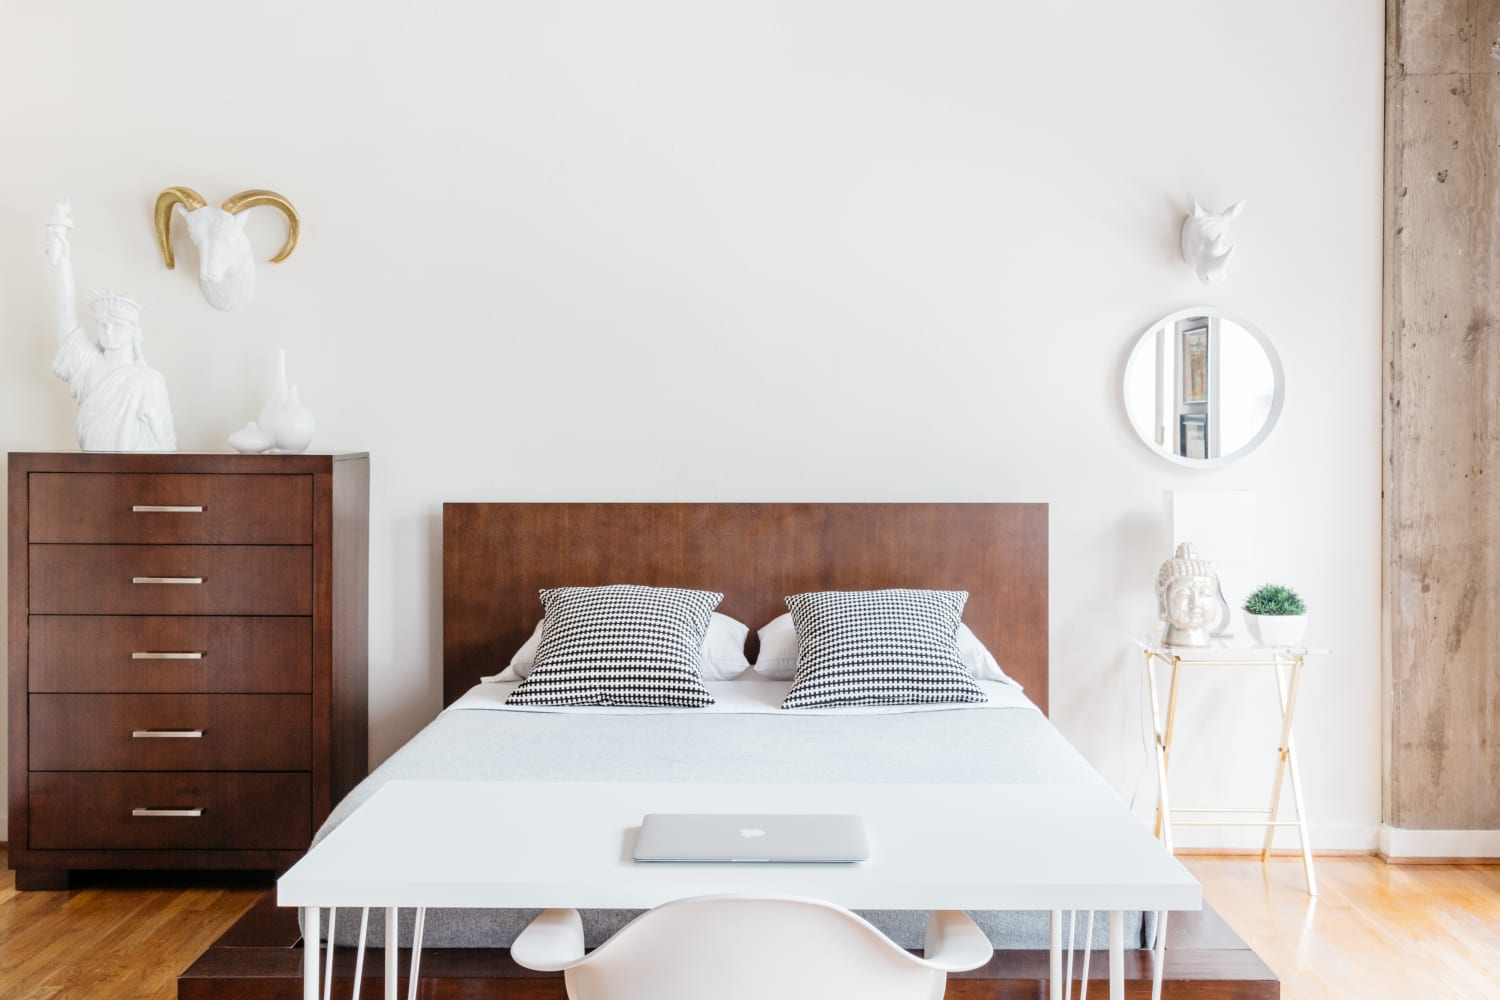 35 Minimalist Bedroom Ideas (With Photos of Inspiring Decor ...